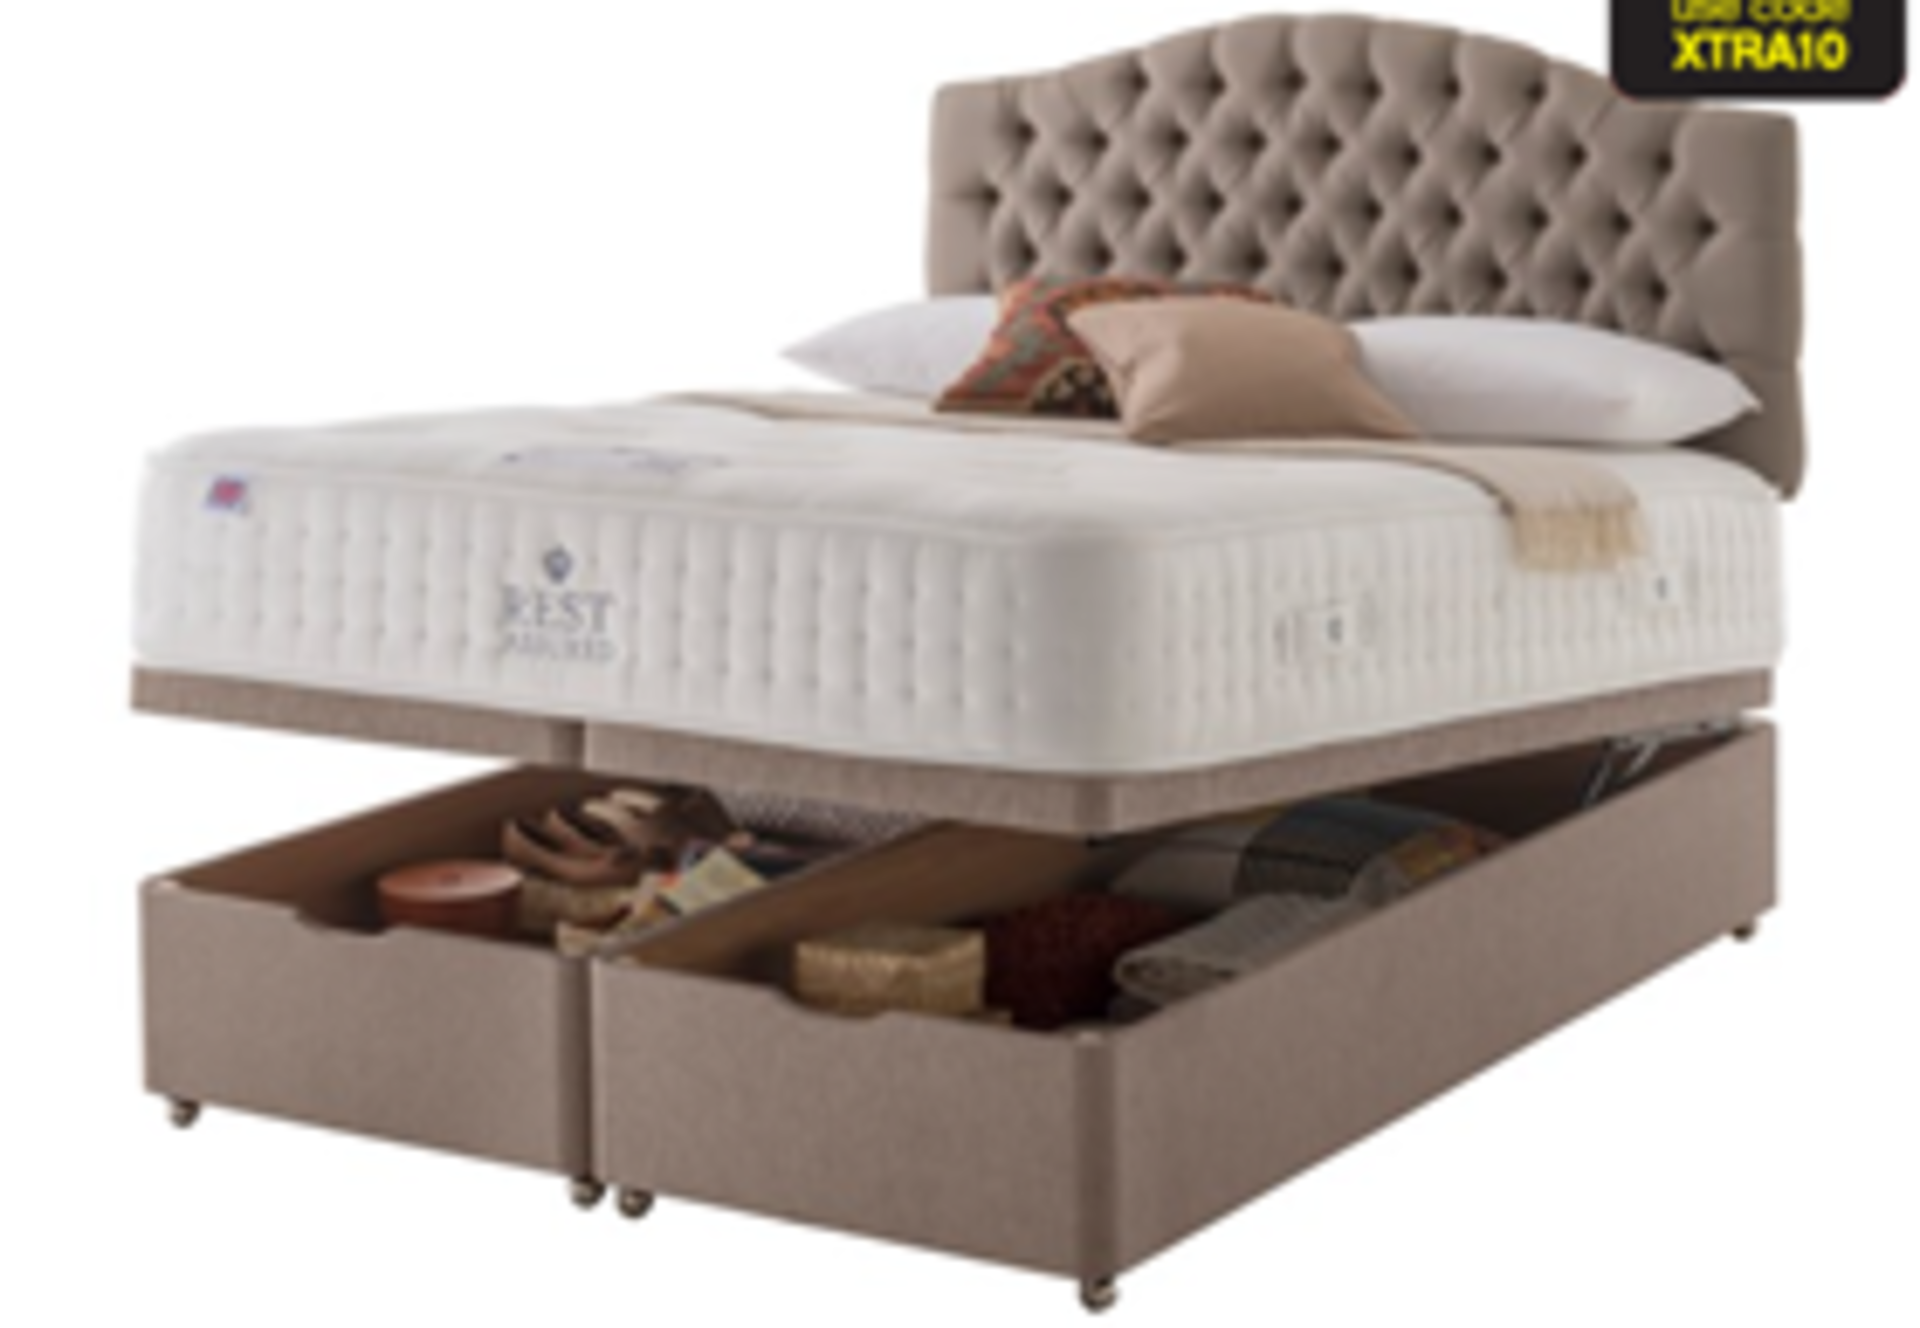 Carpet Right Ex-Display 5ft Rest Assured Windsor Ottoman Bed & Headboard|RRP £2399|